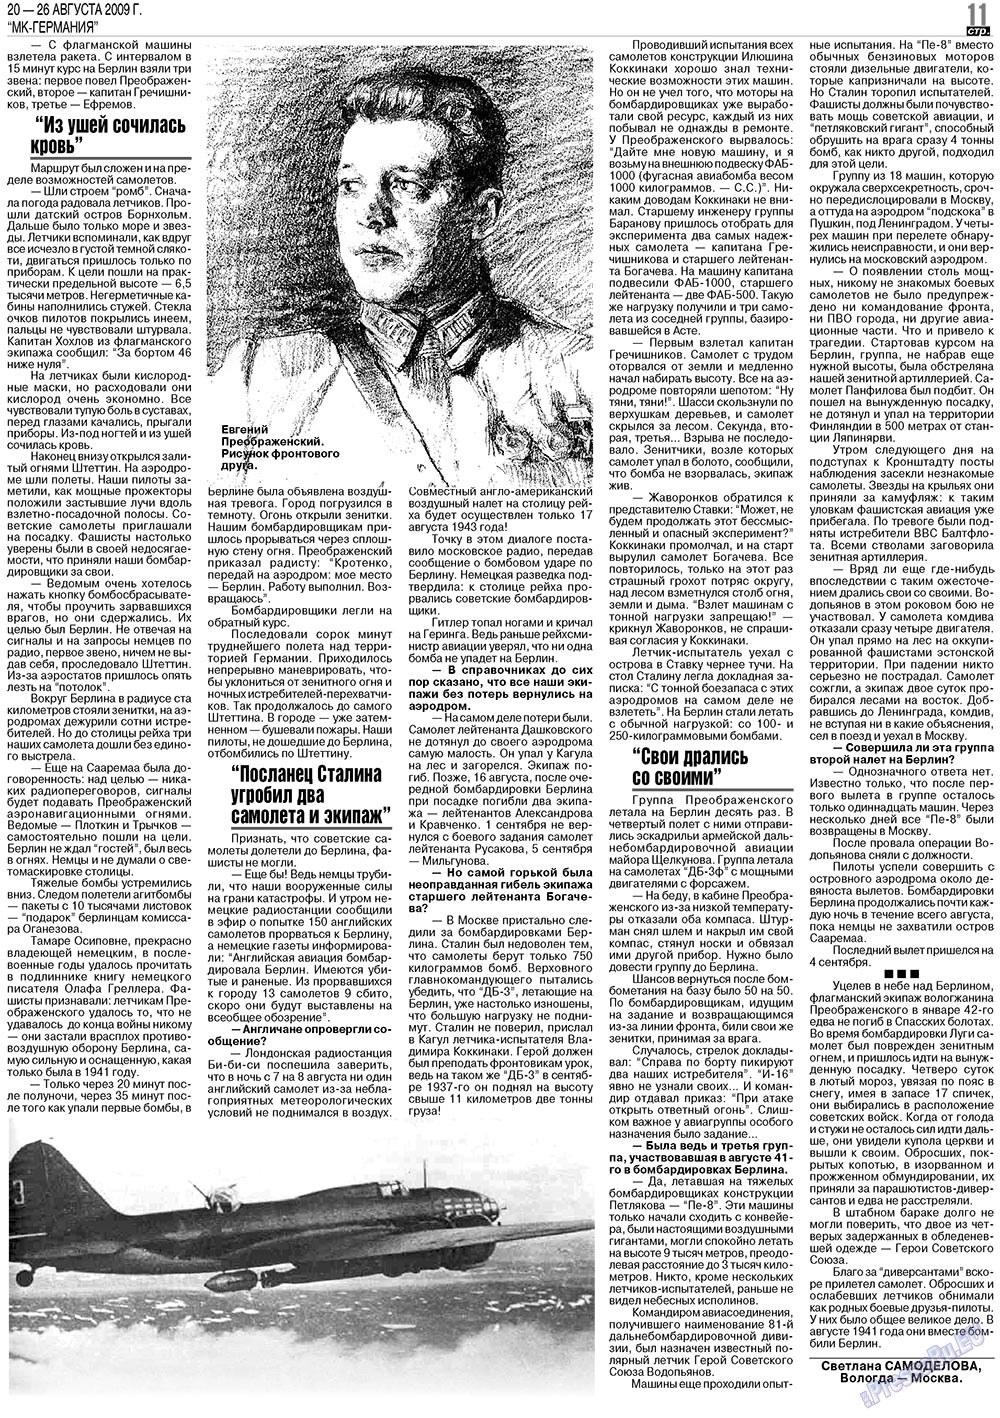 МК-Германия, газета. 2009 №34 стр.11